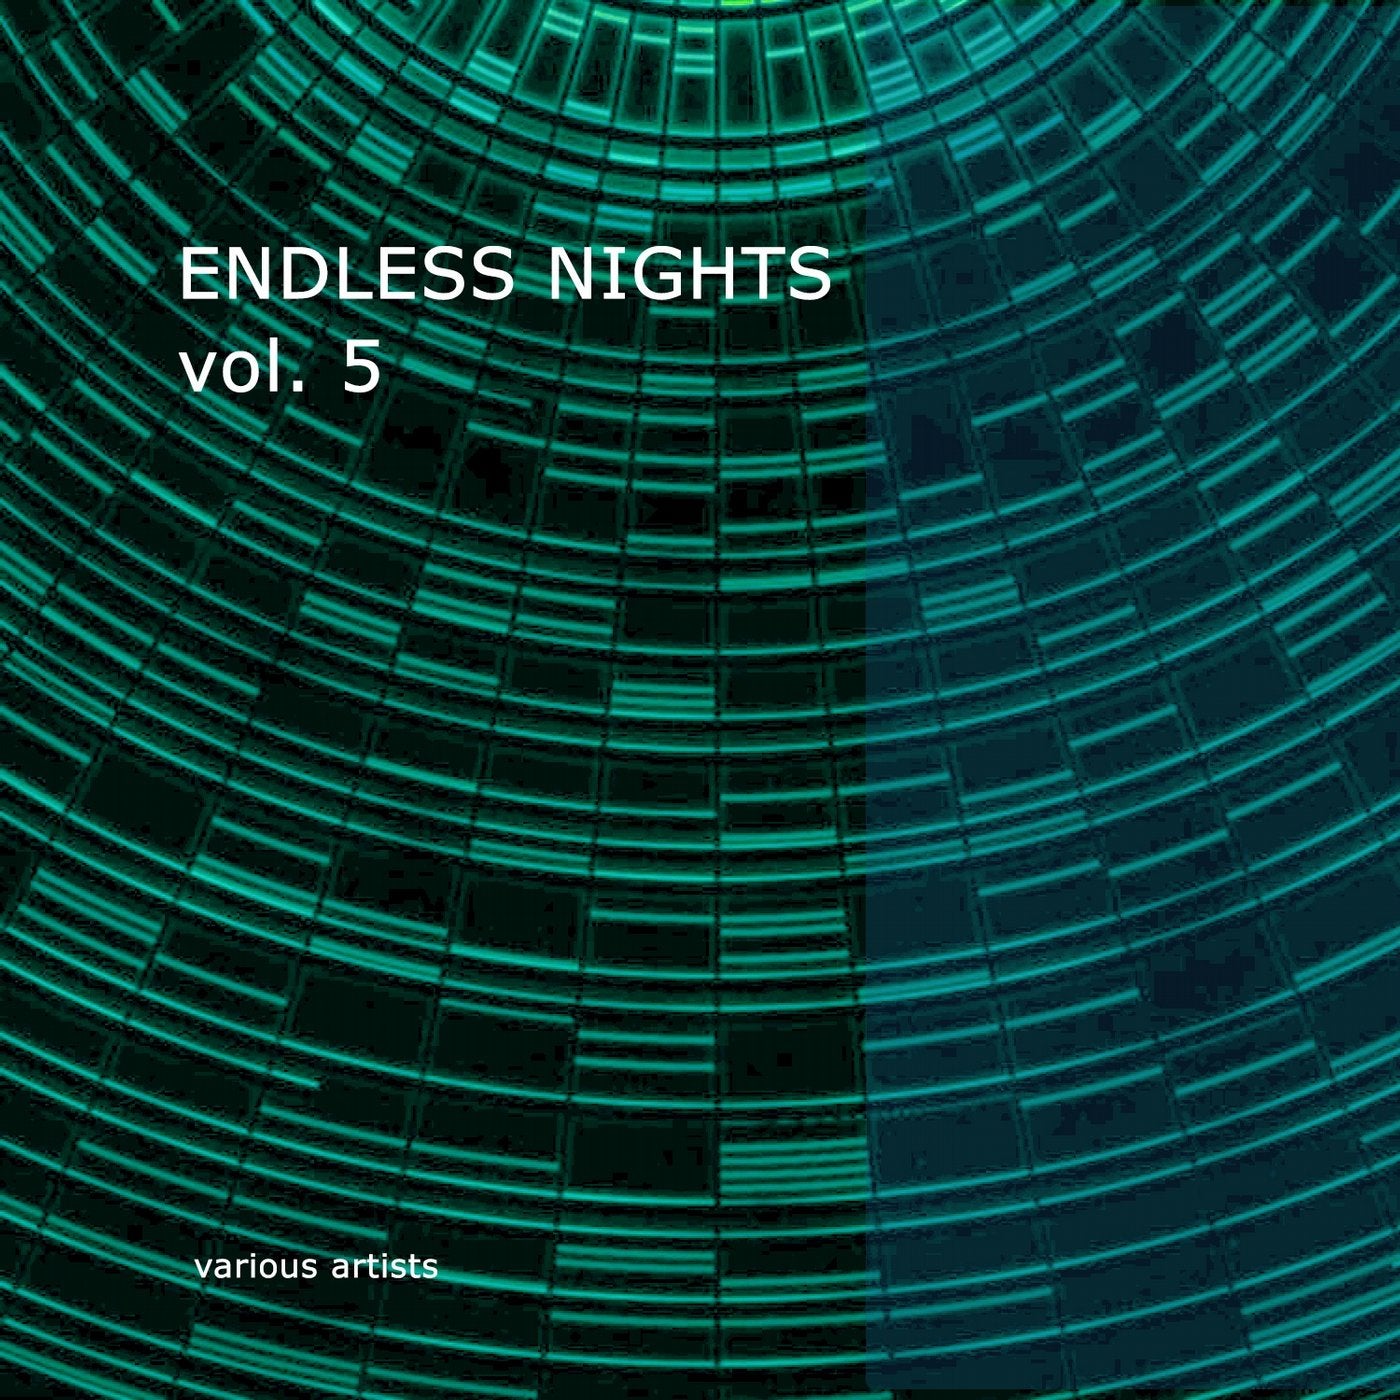 Endless Nights, Vol. 5